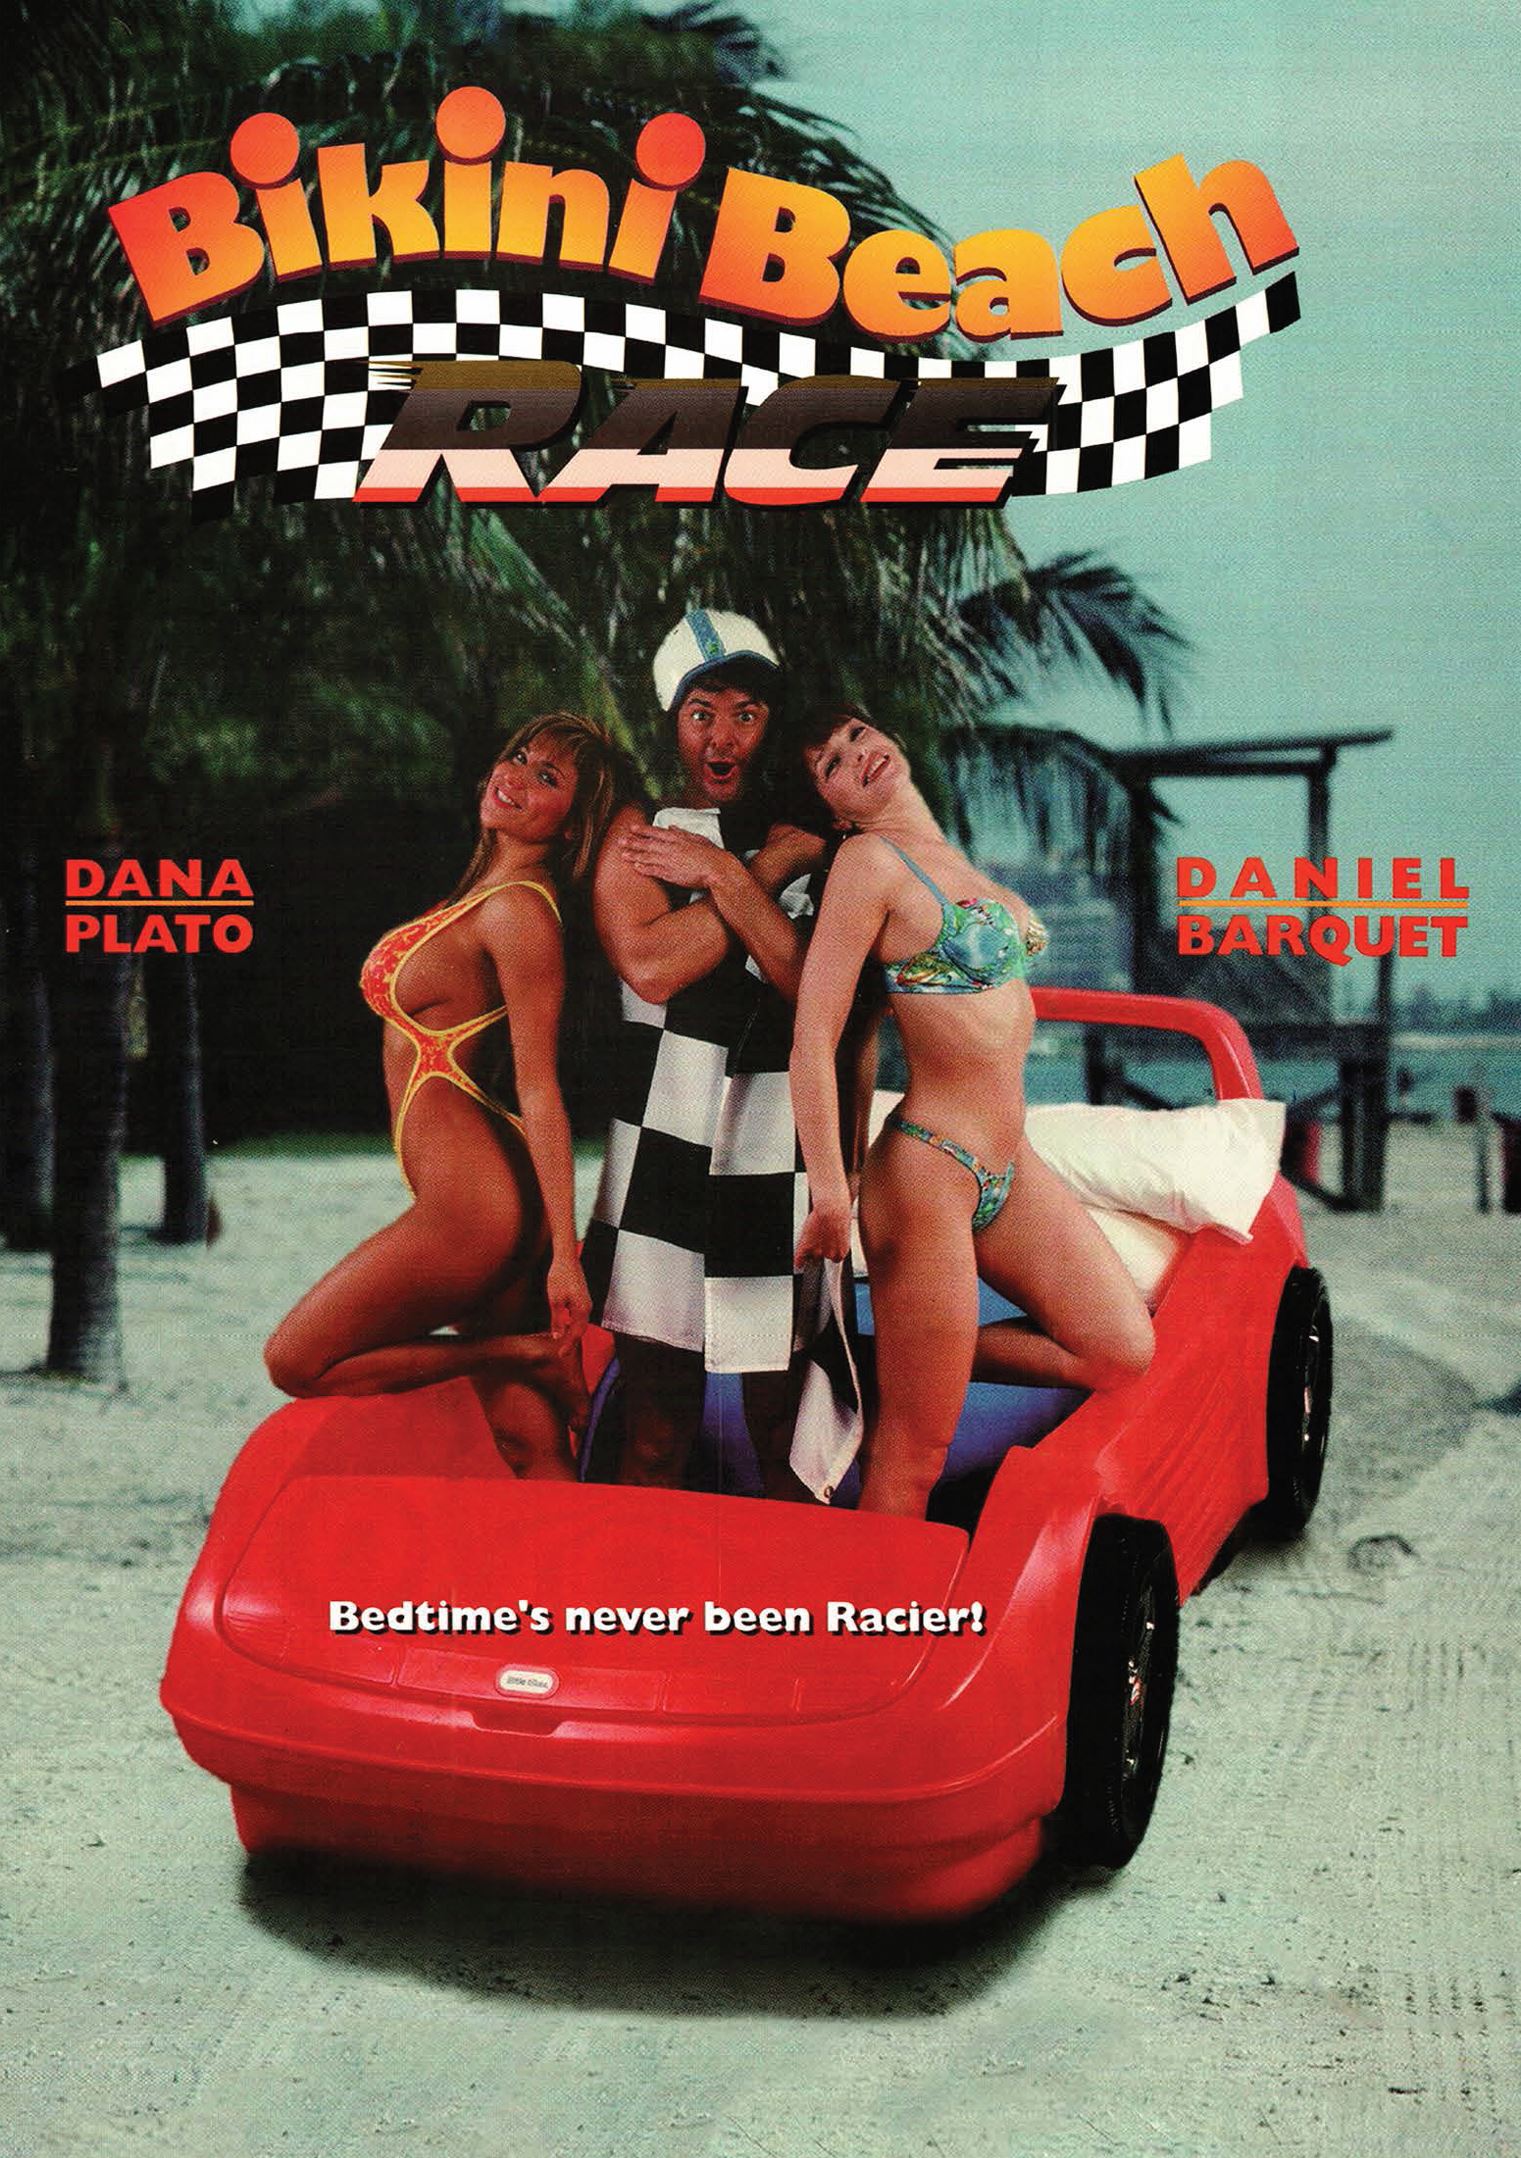 Nude Beach Sex On A Boat - Best Buy: Bikini Beach Race [DVD] [1992]